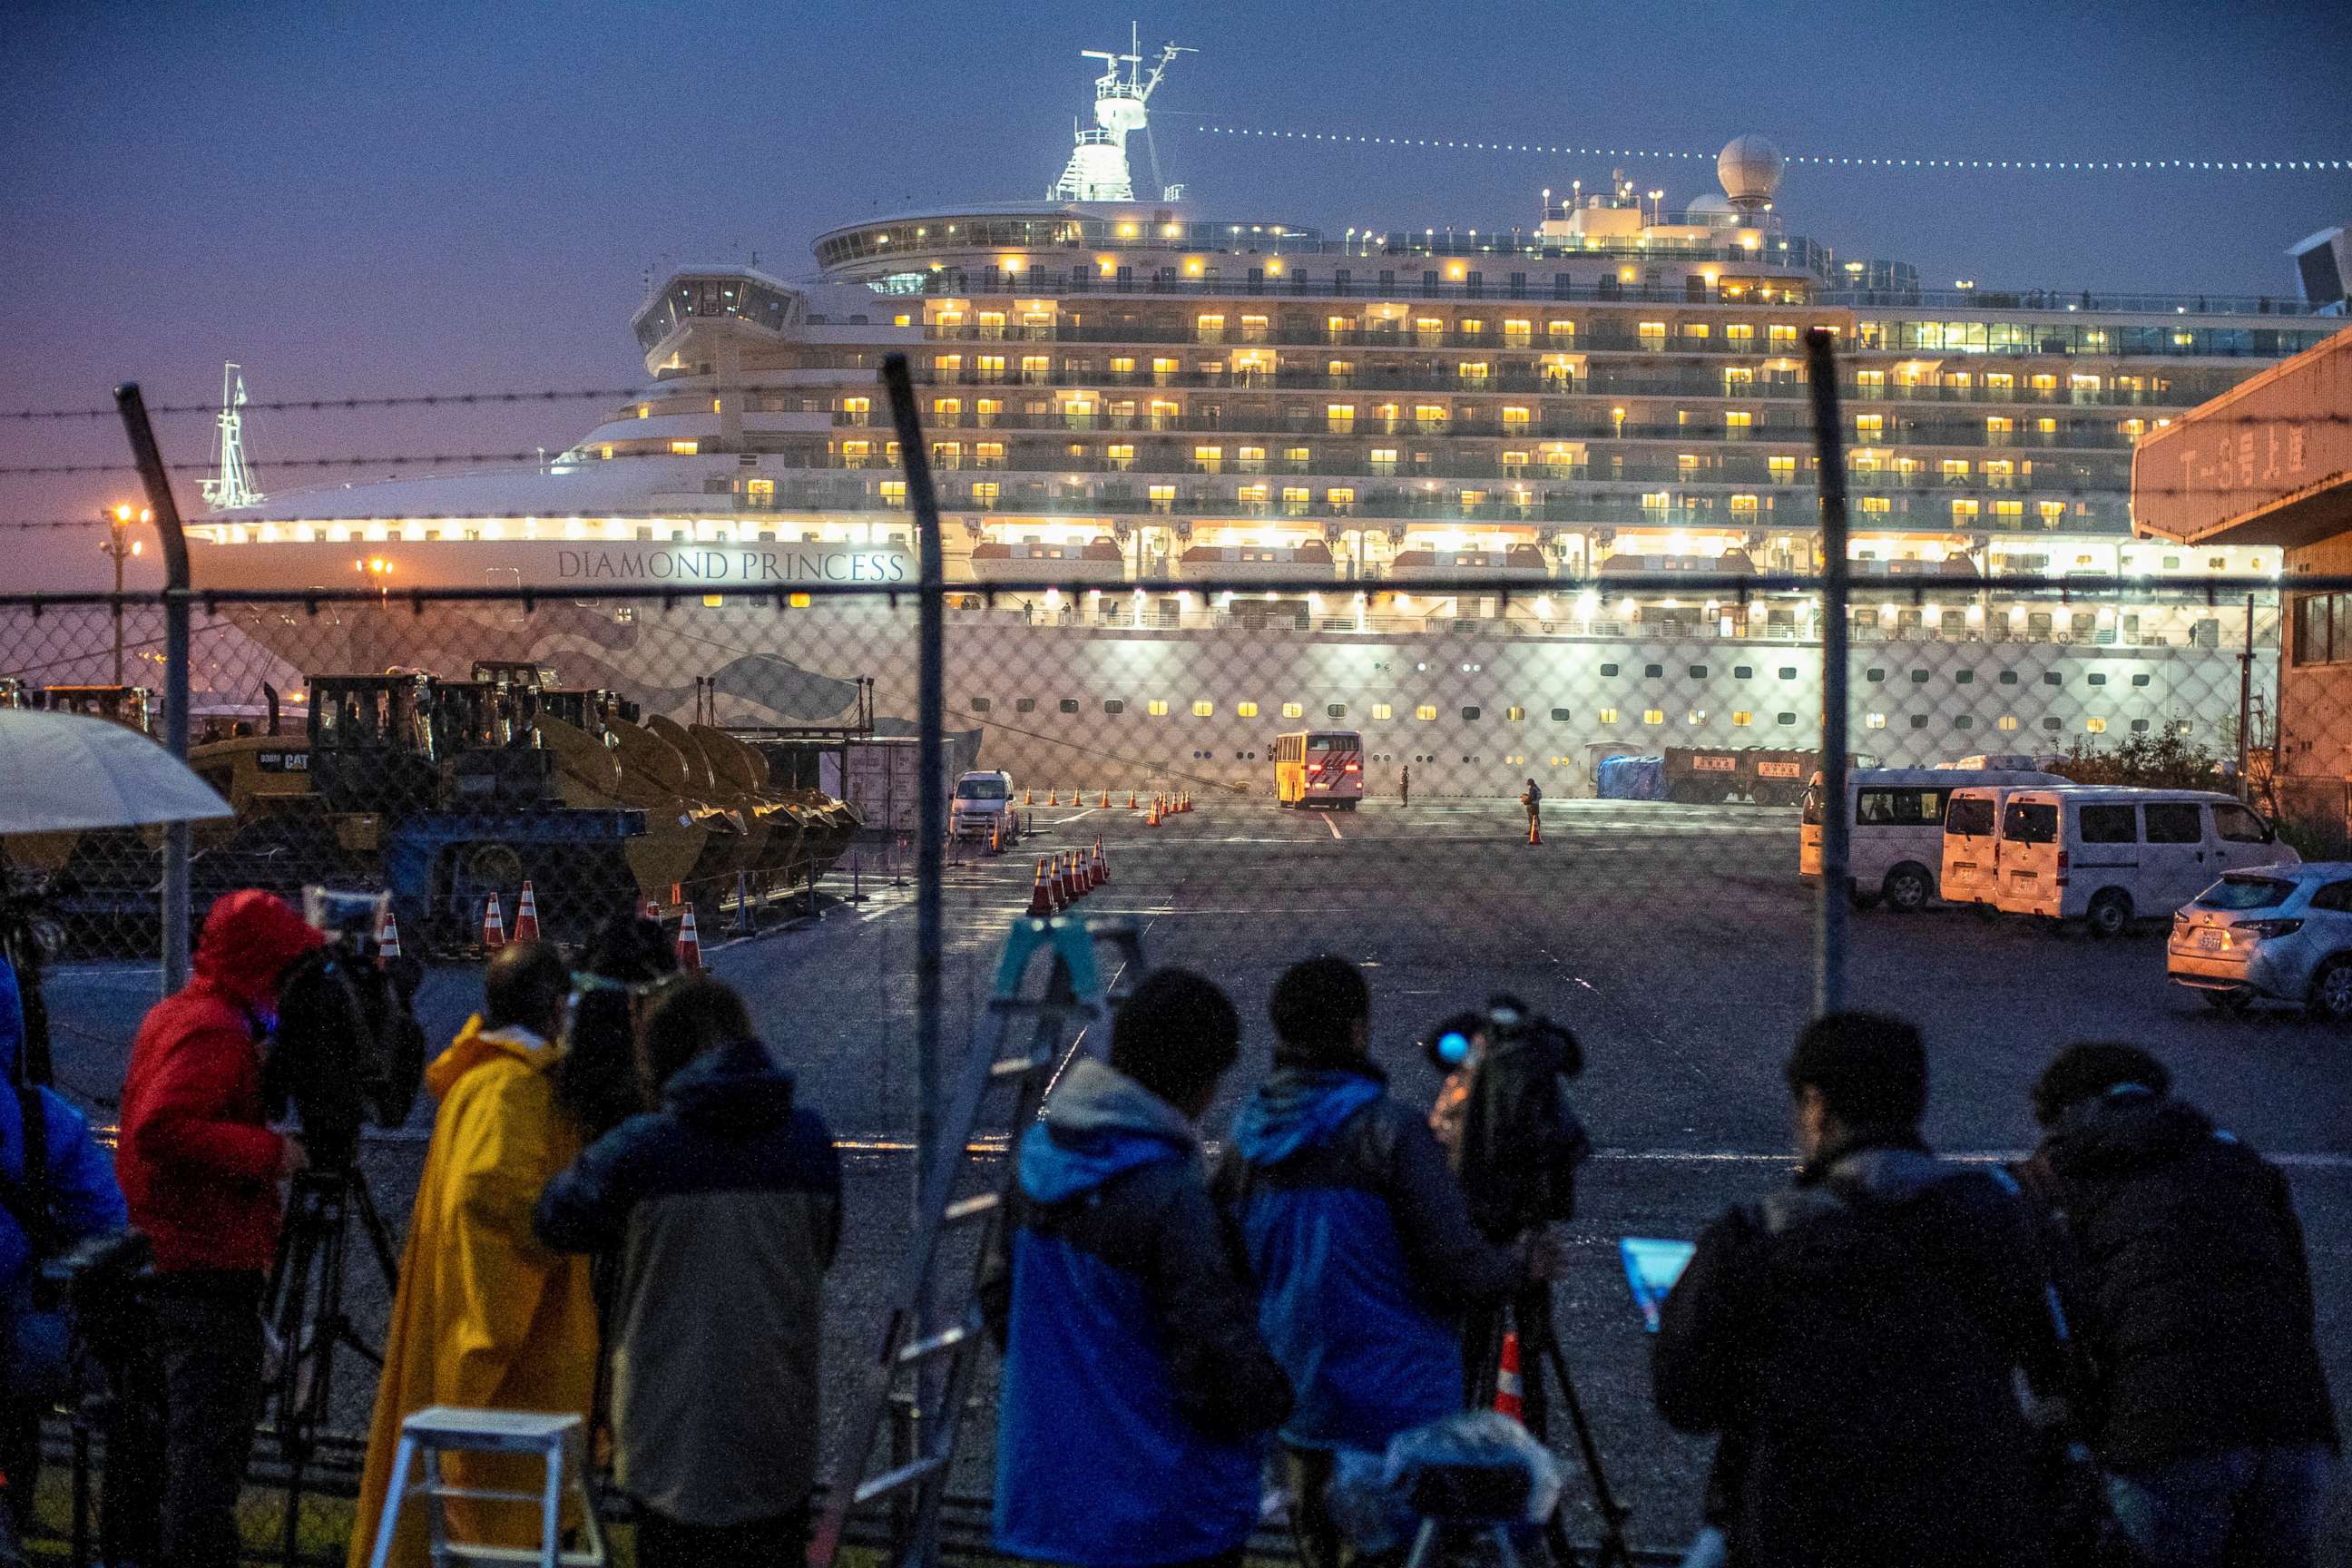 PHOTO: A bus arrives near the cruise ship Diamond Princess, where dozens of passengers were tested positive for coronavirus, at Daikoku Pier Cruise Terminal in Yokohama, south of Tokyo, Japan, February 16, 2020. 